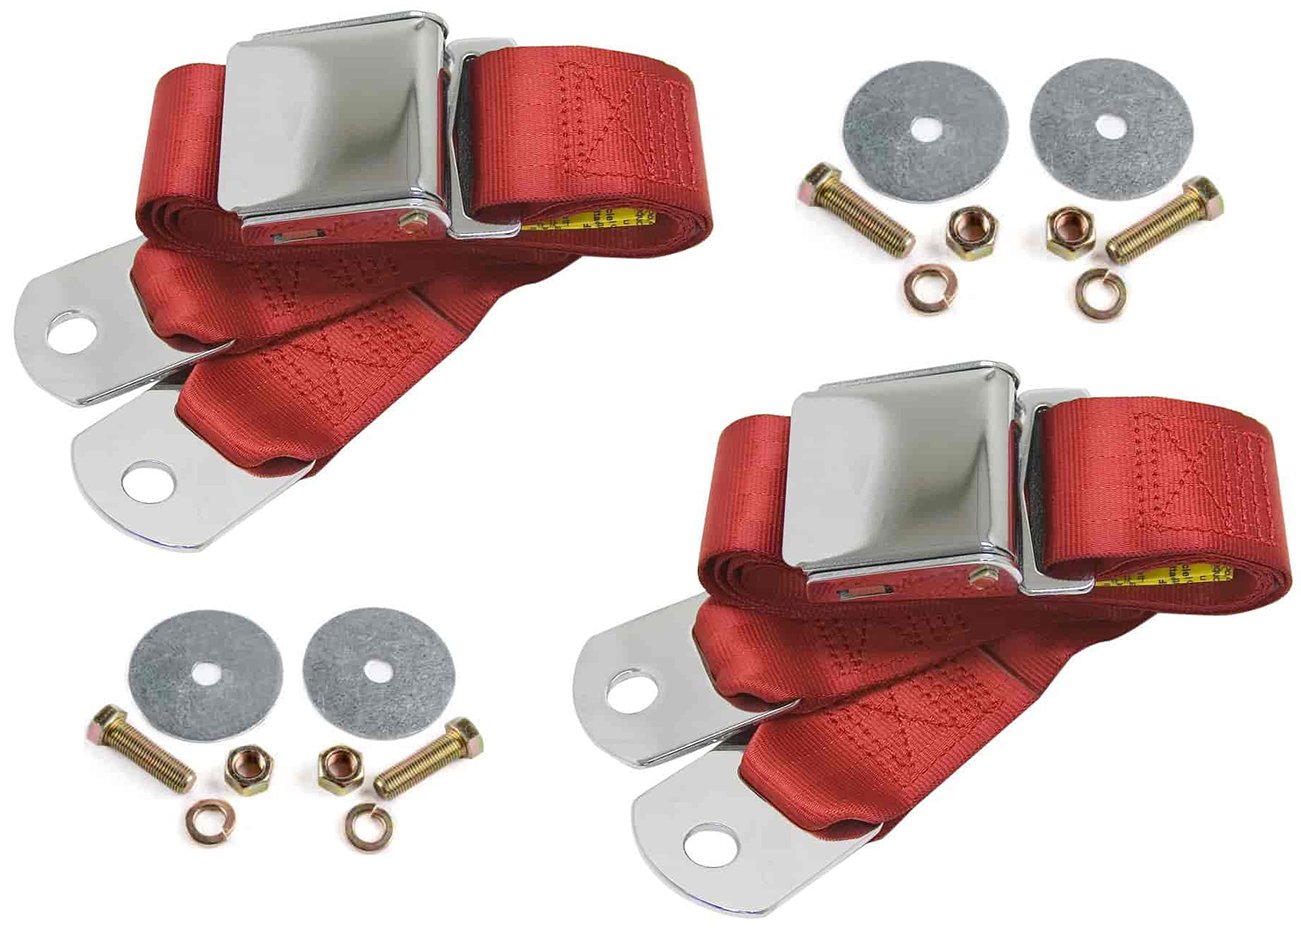 2-Point Aviation Lap Belt Kit